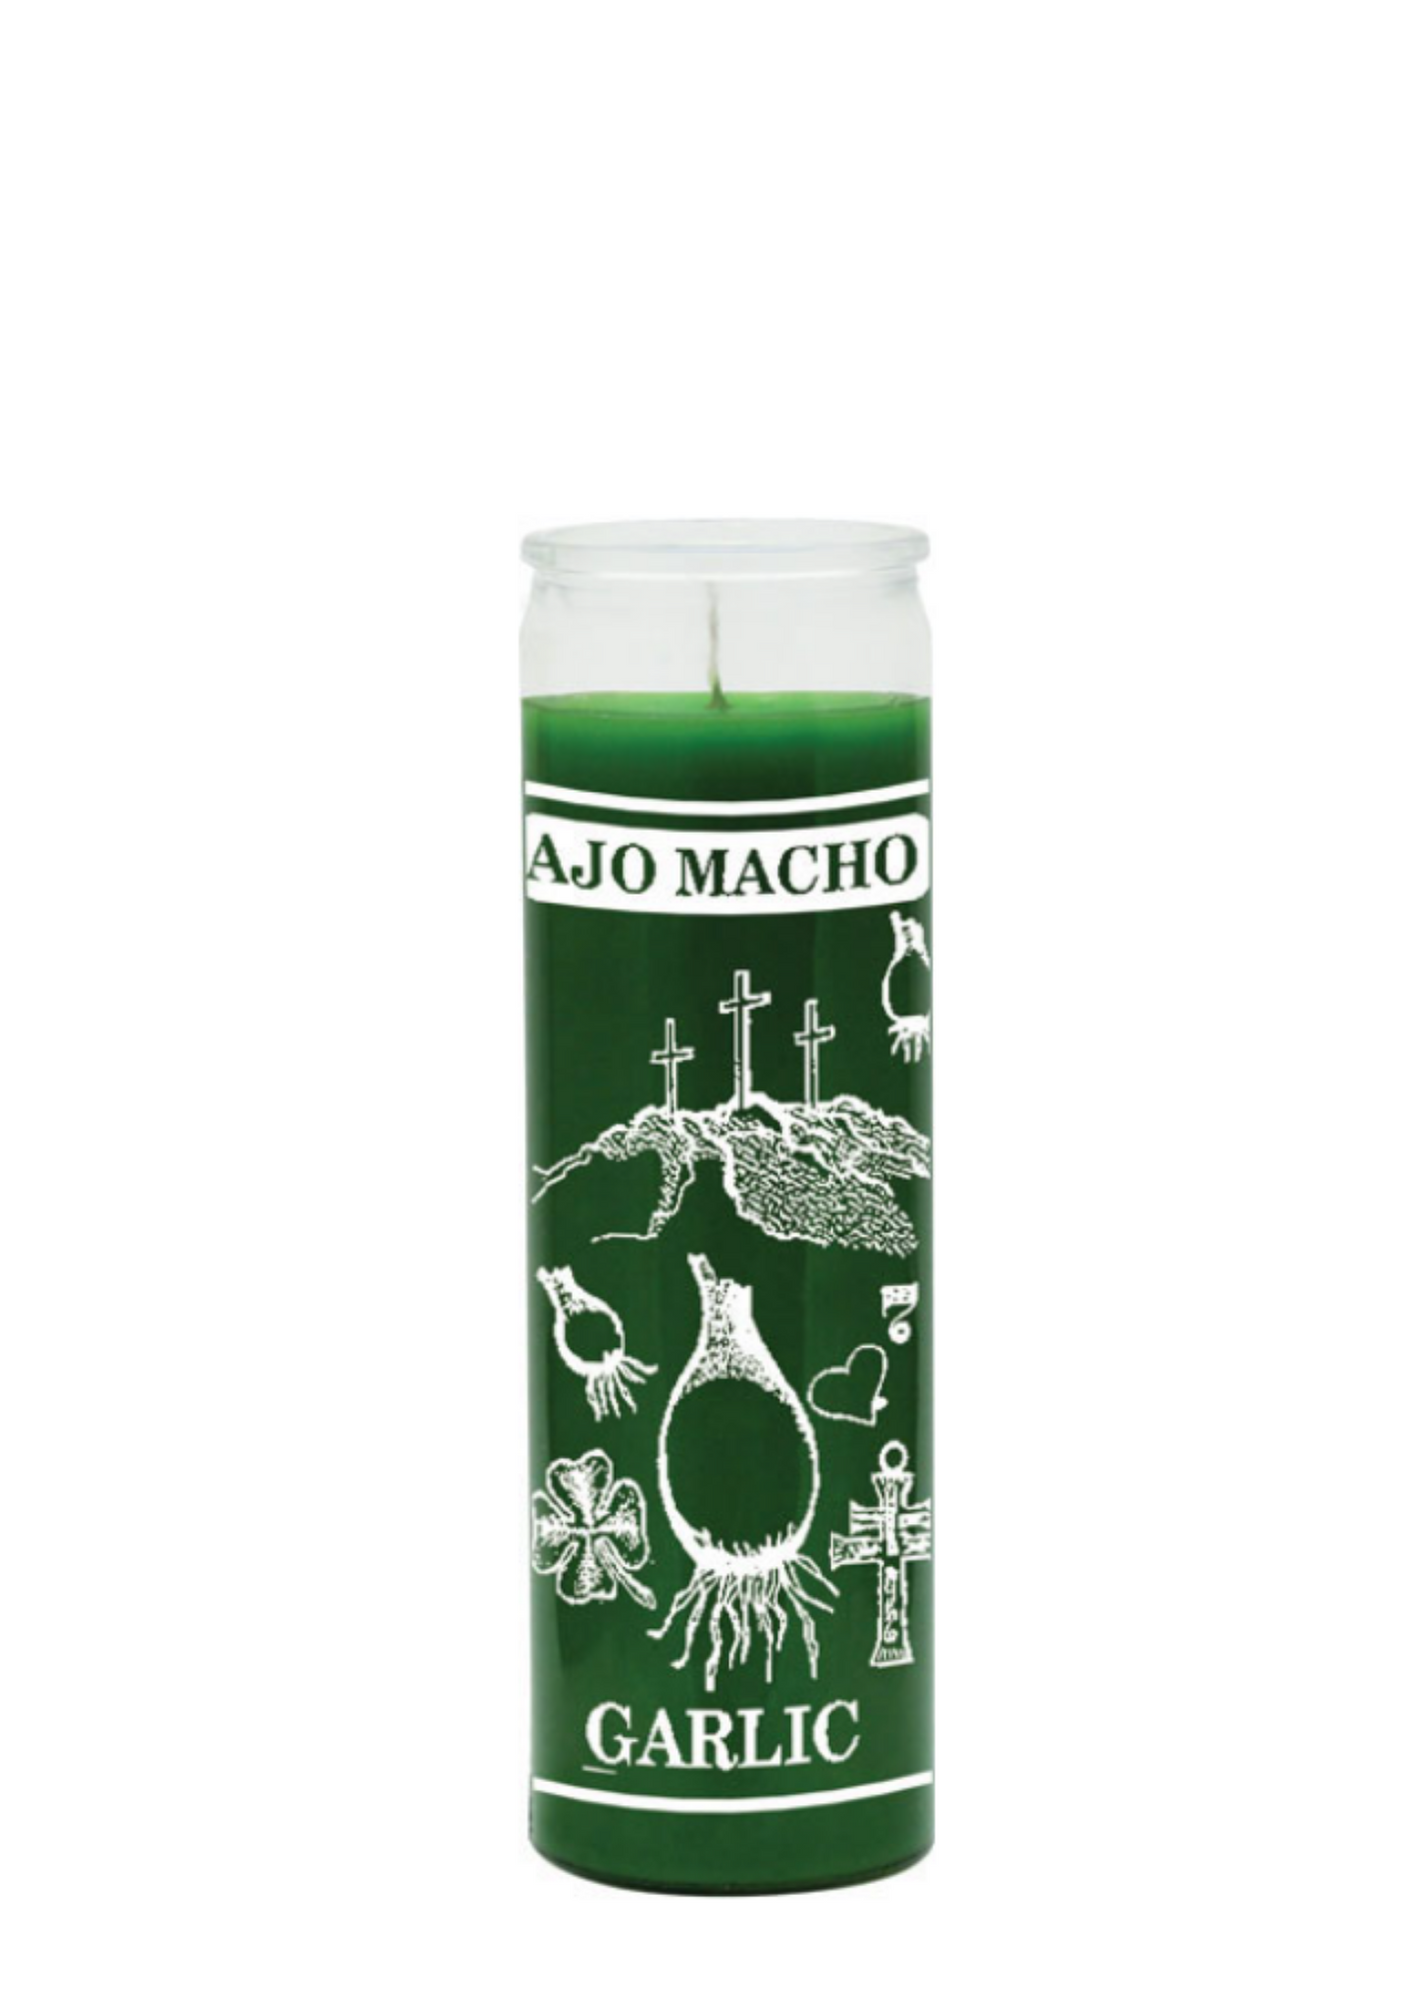 Garlic / ajo macho (green) 1 color 7 day candle